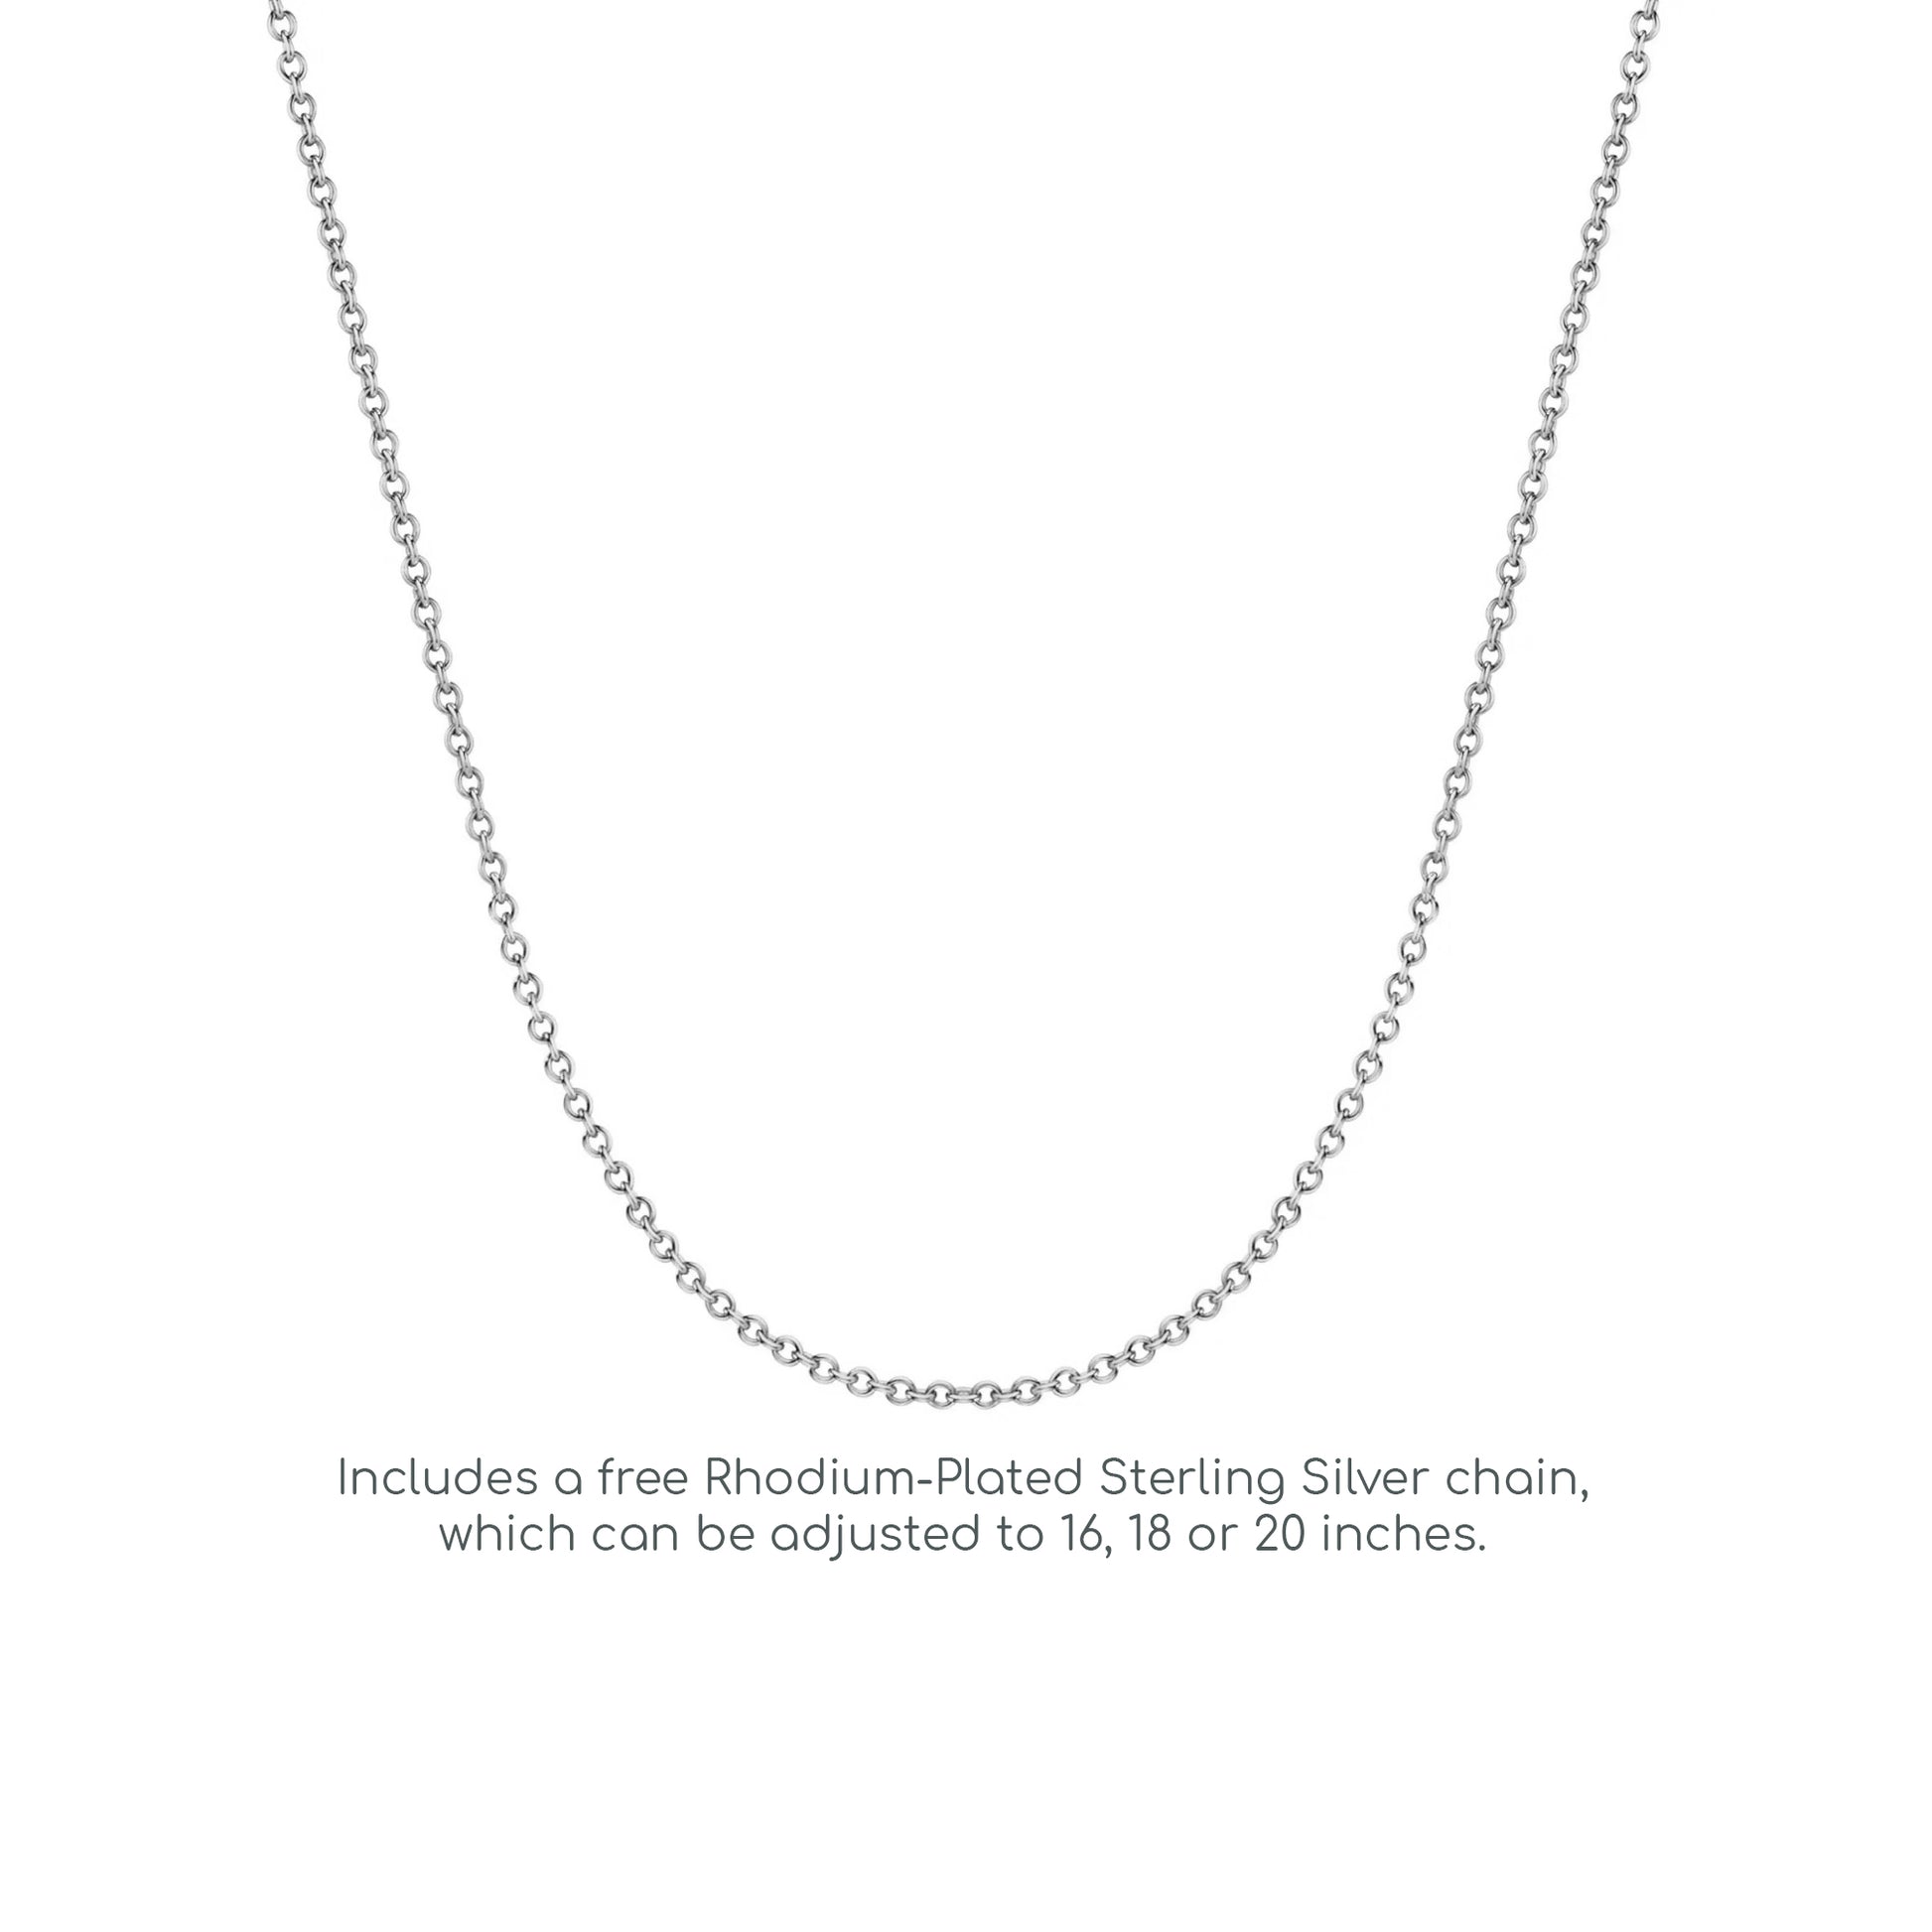 Silver  CZ Pave Love Heart Pendant Necklace 18 inch - GVP281